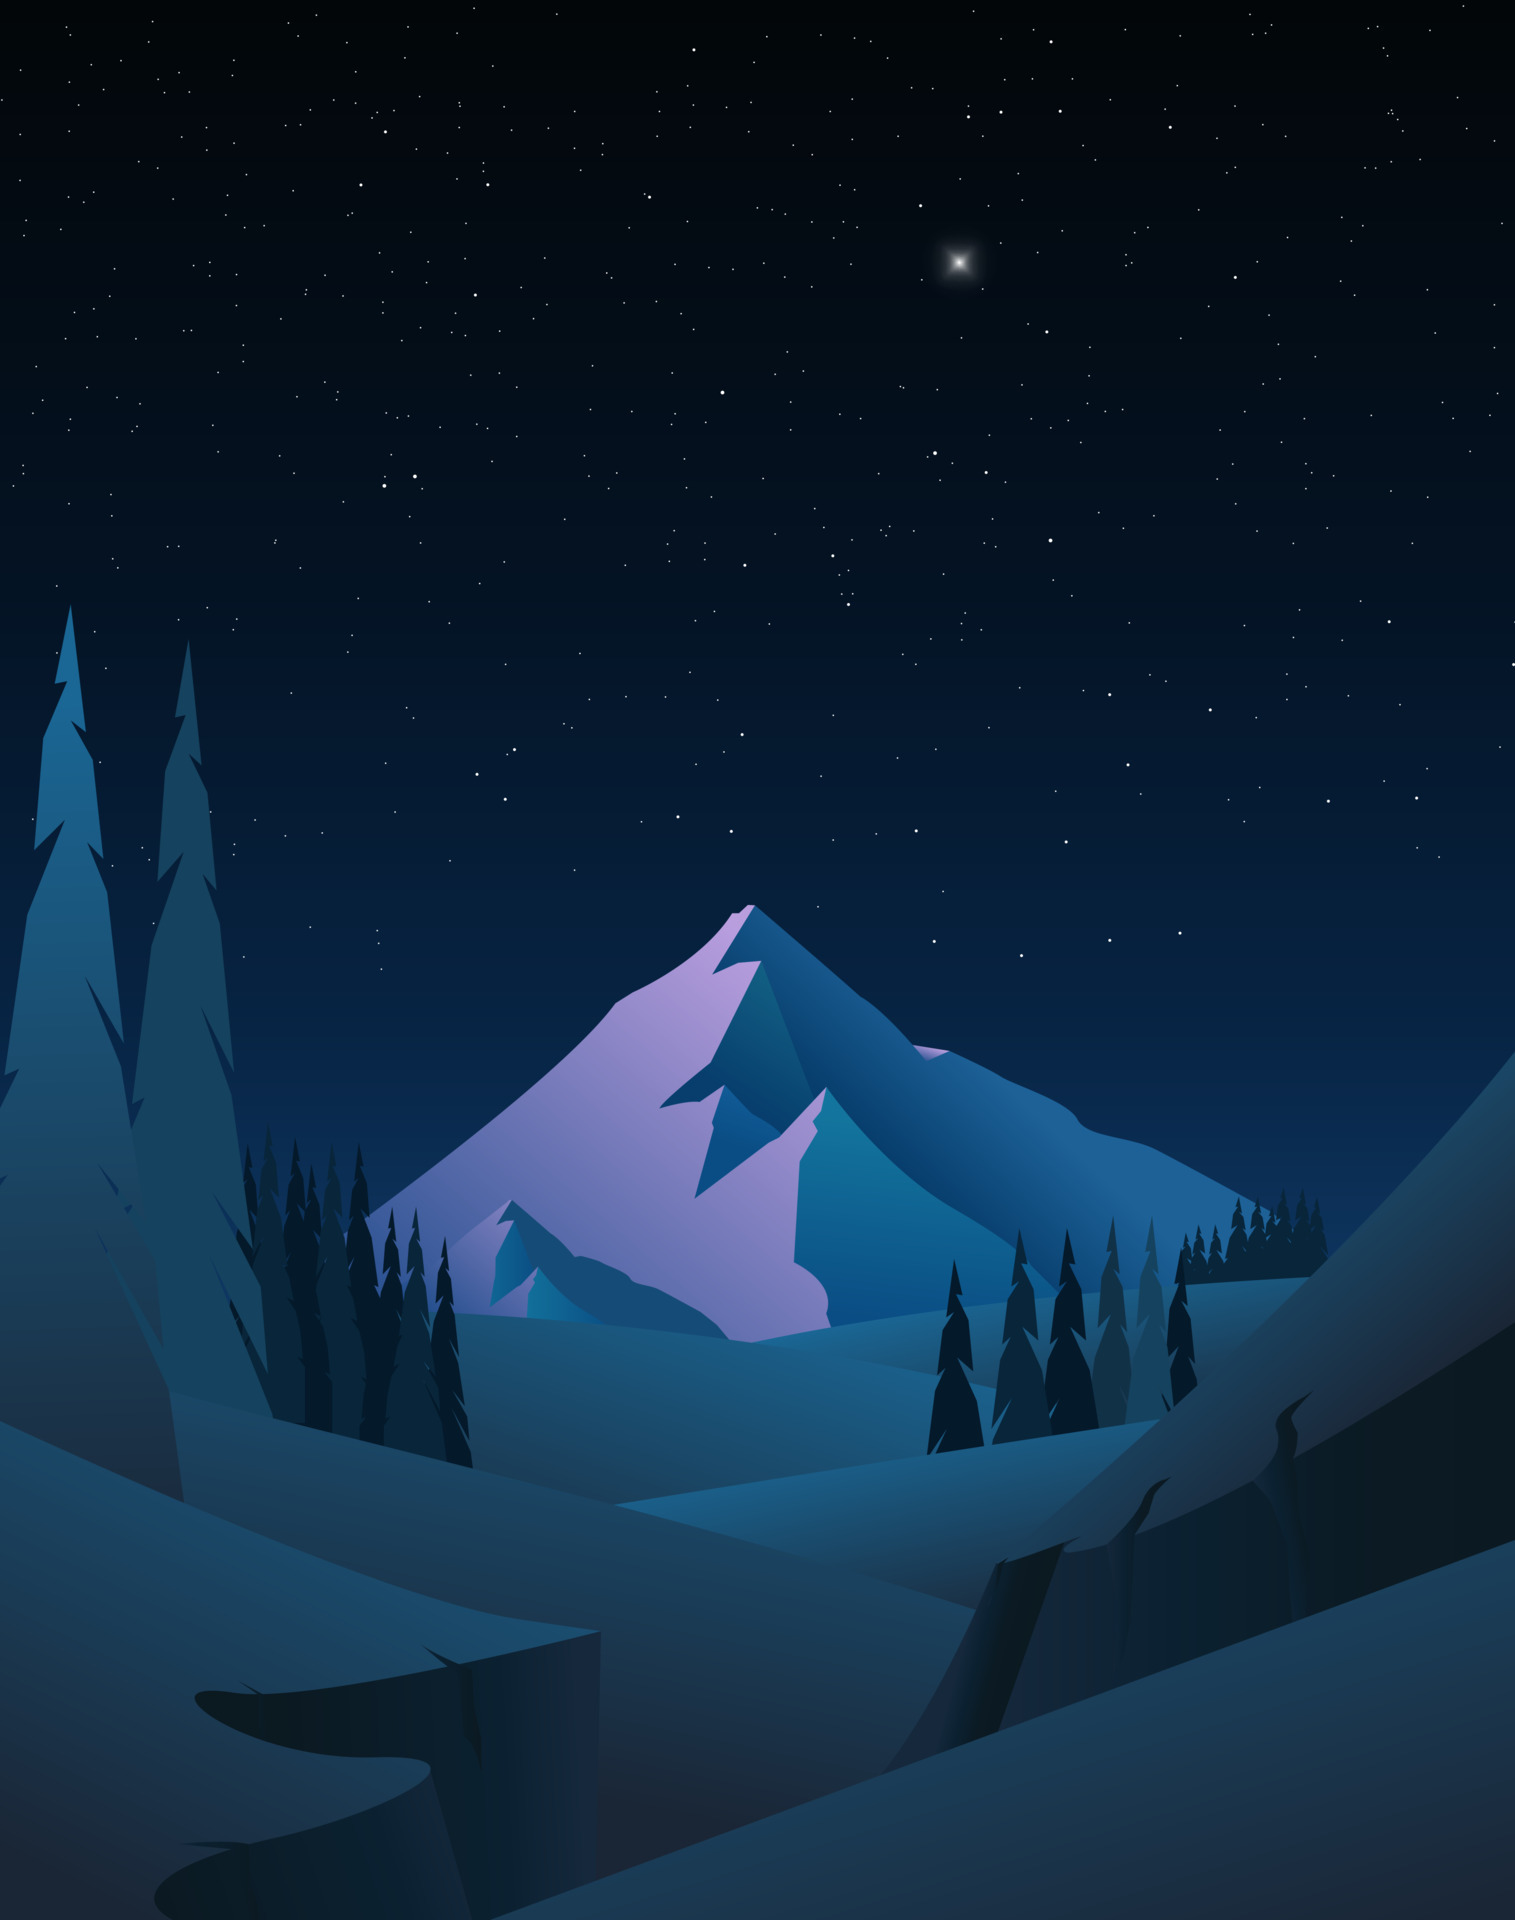 beautiful landscape with mountains night scene vector illustration ...